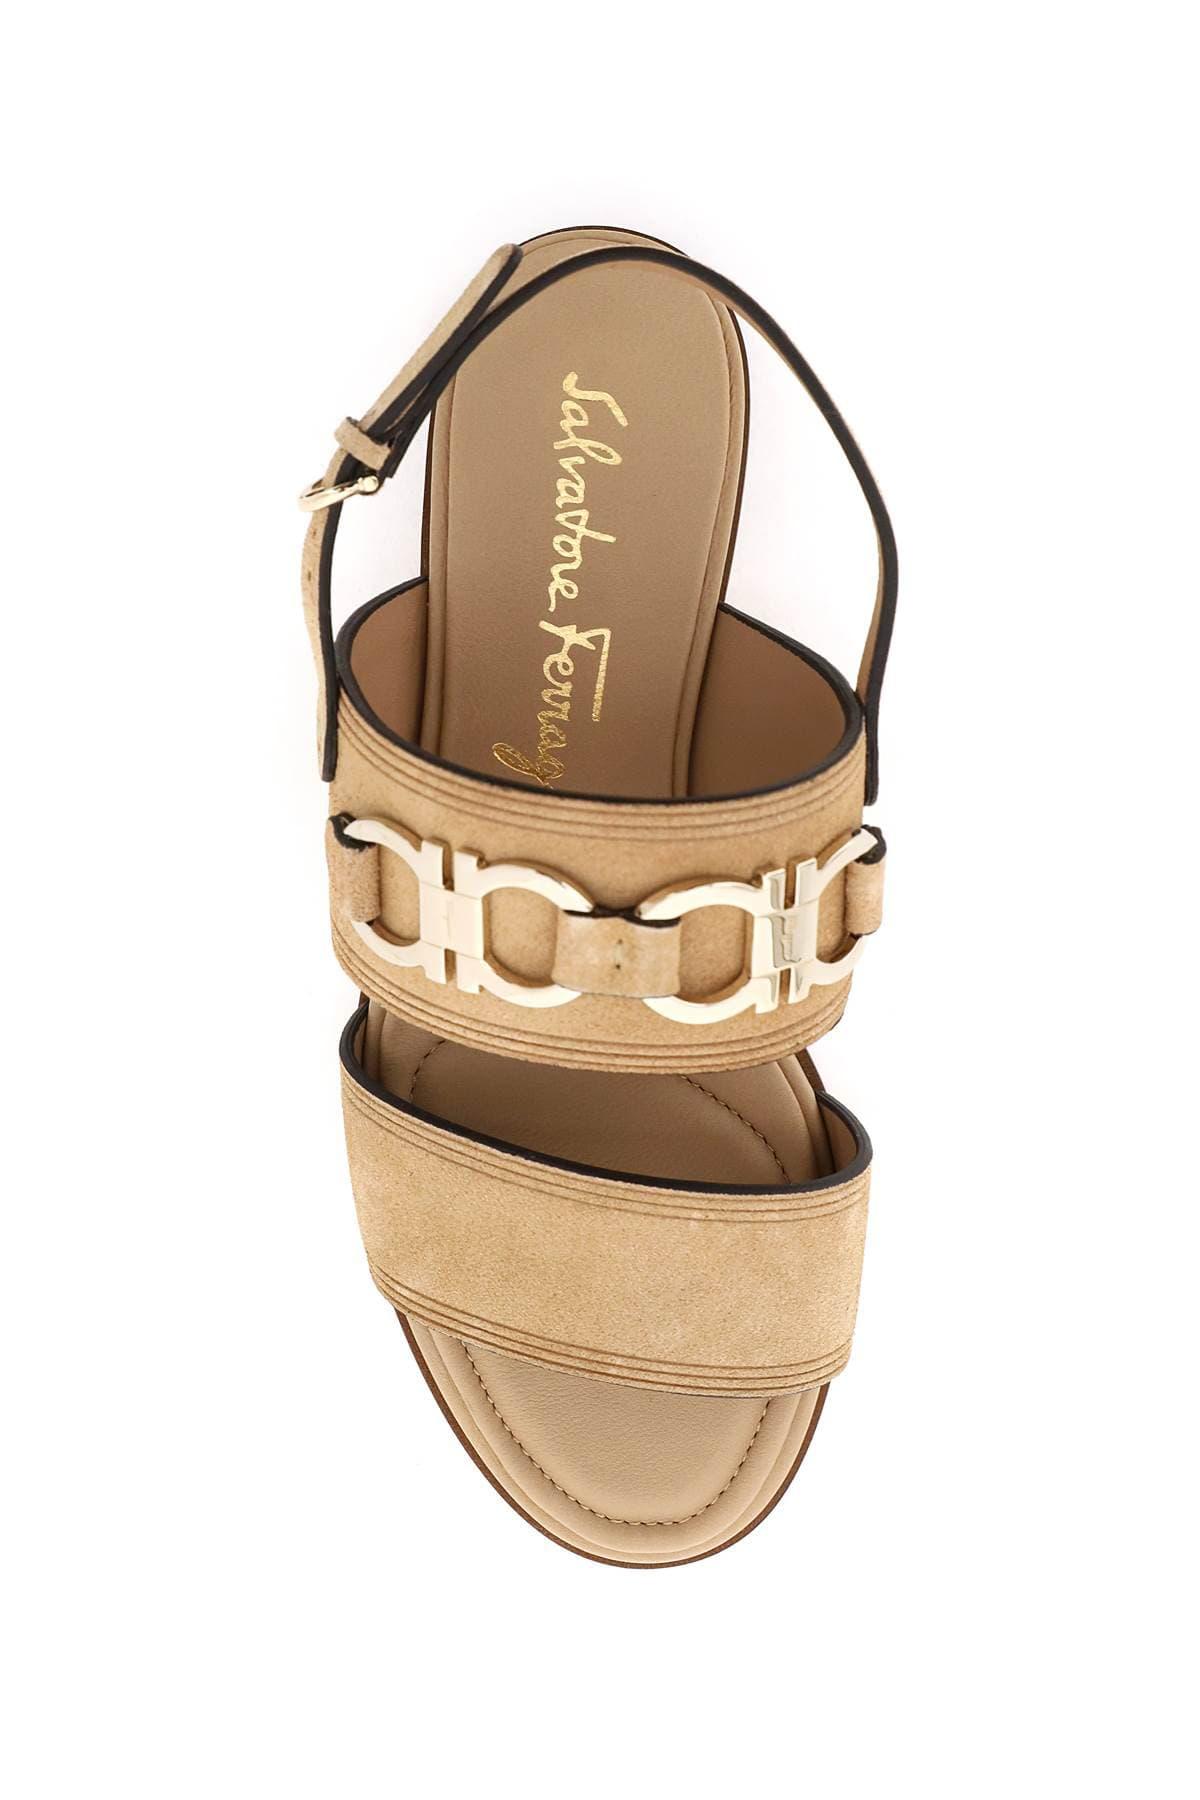 Ferragamo Suede Leather Gancini Sandals in Beige (Brown) | Lyst